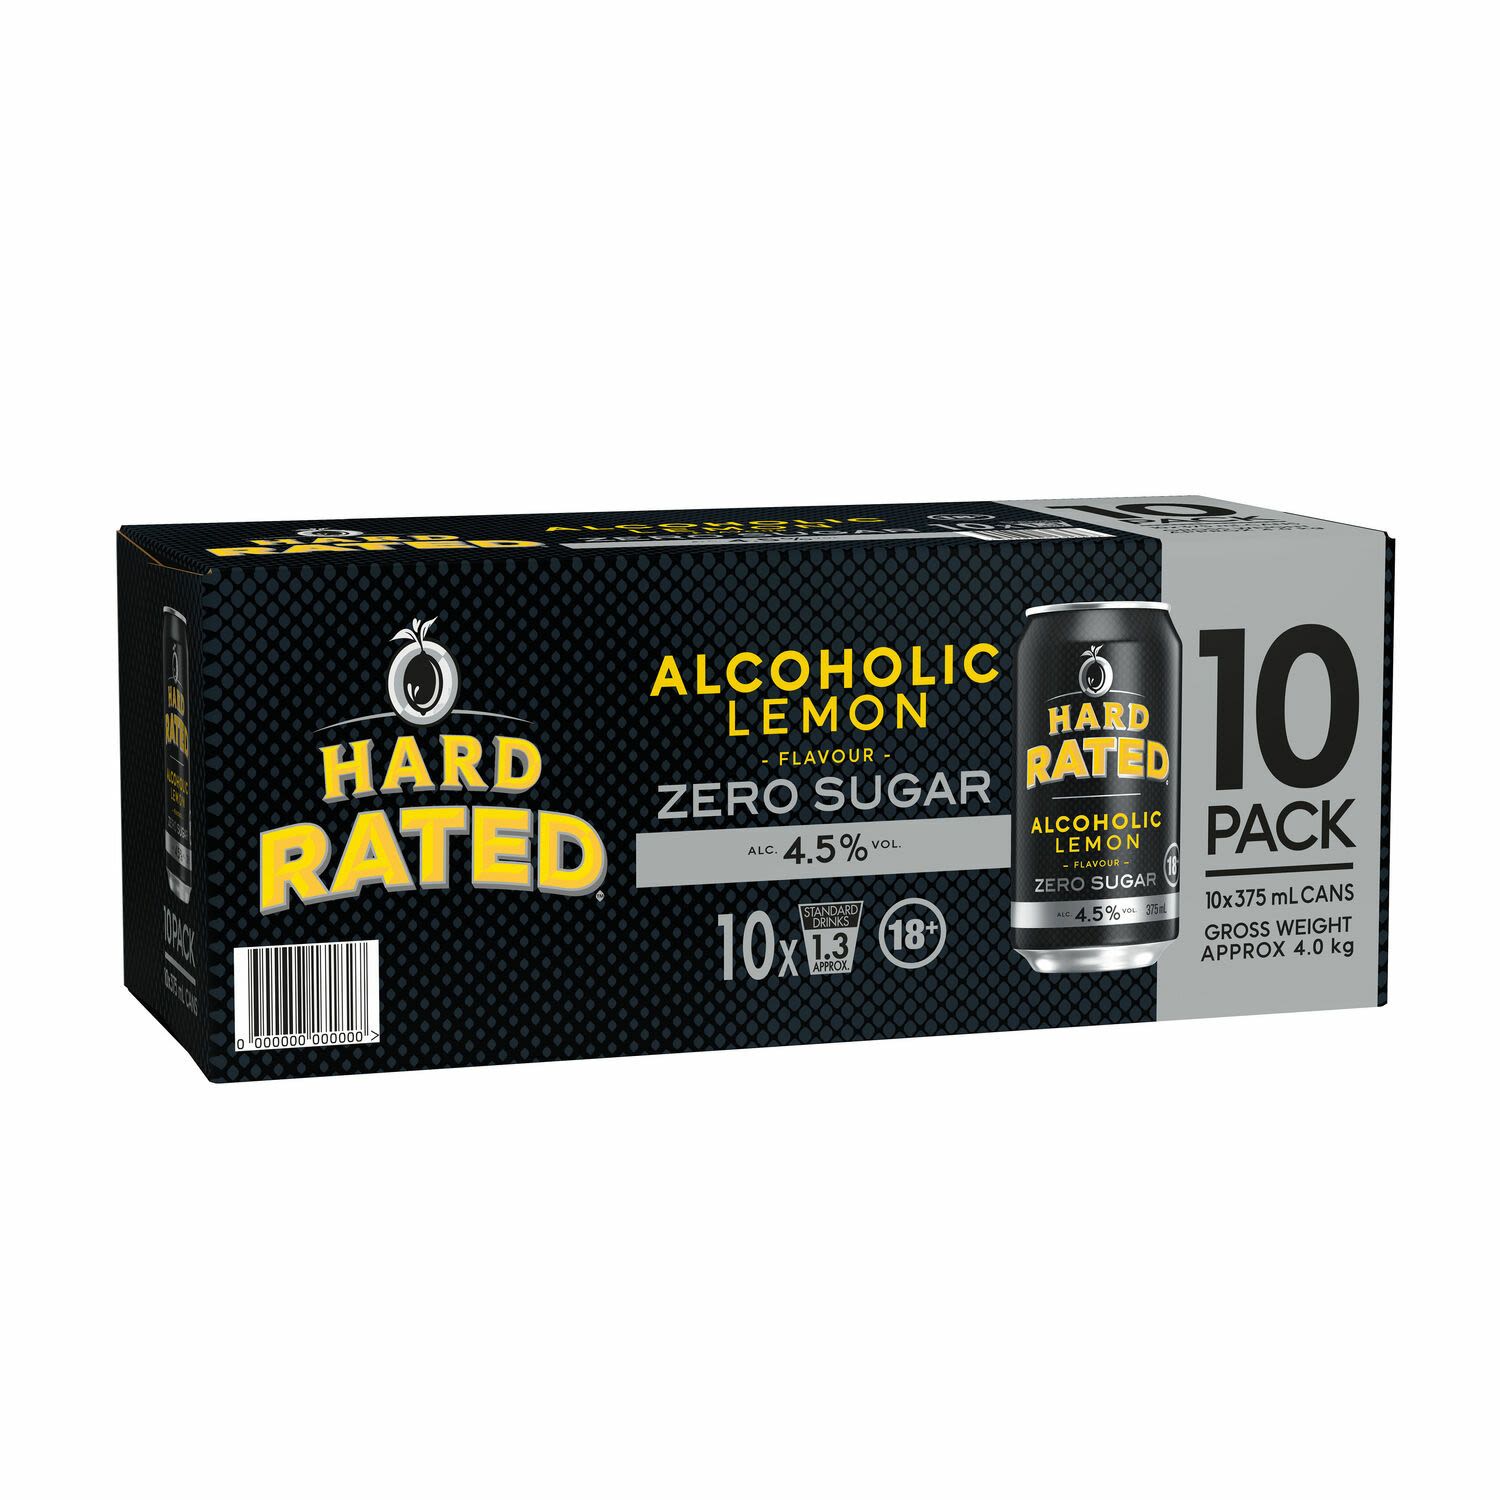 Hard Rated Zero Sugar Alcoholic Lemon Can 375mL 10 Pack